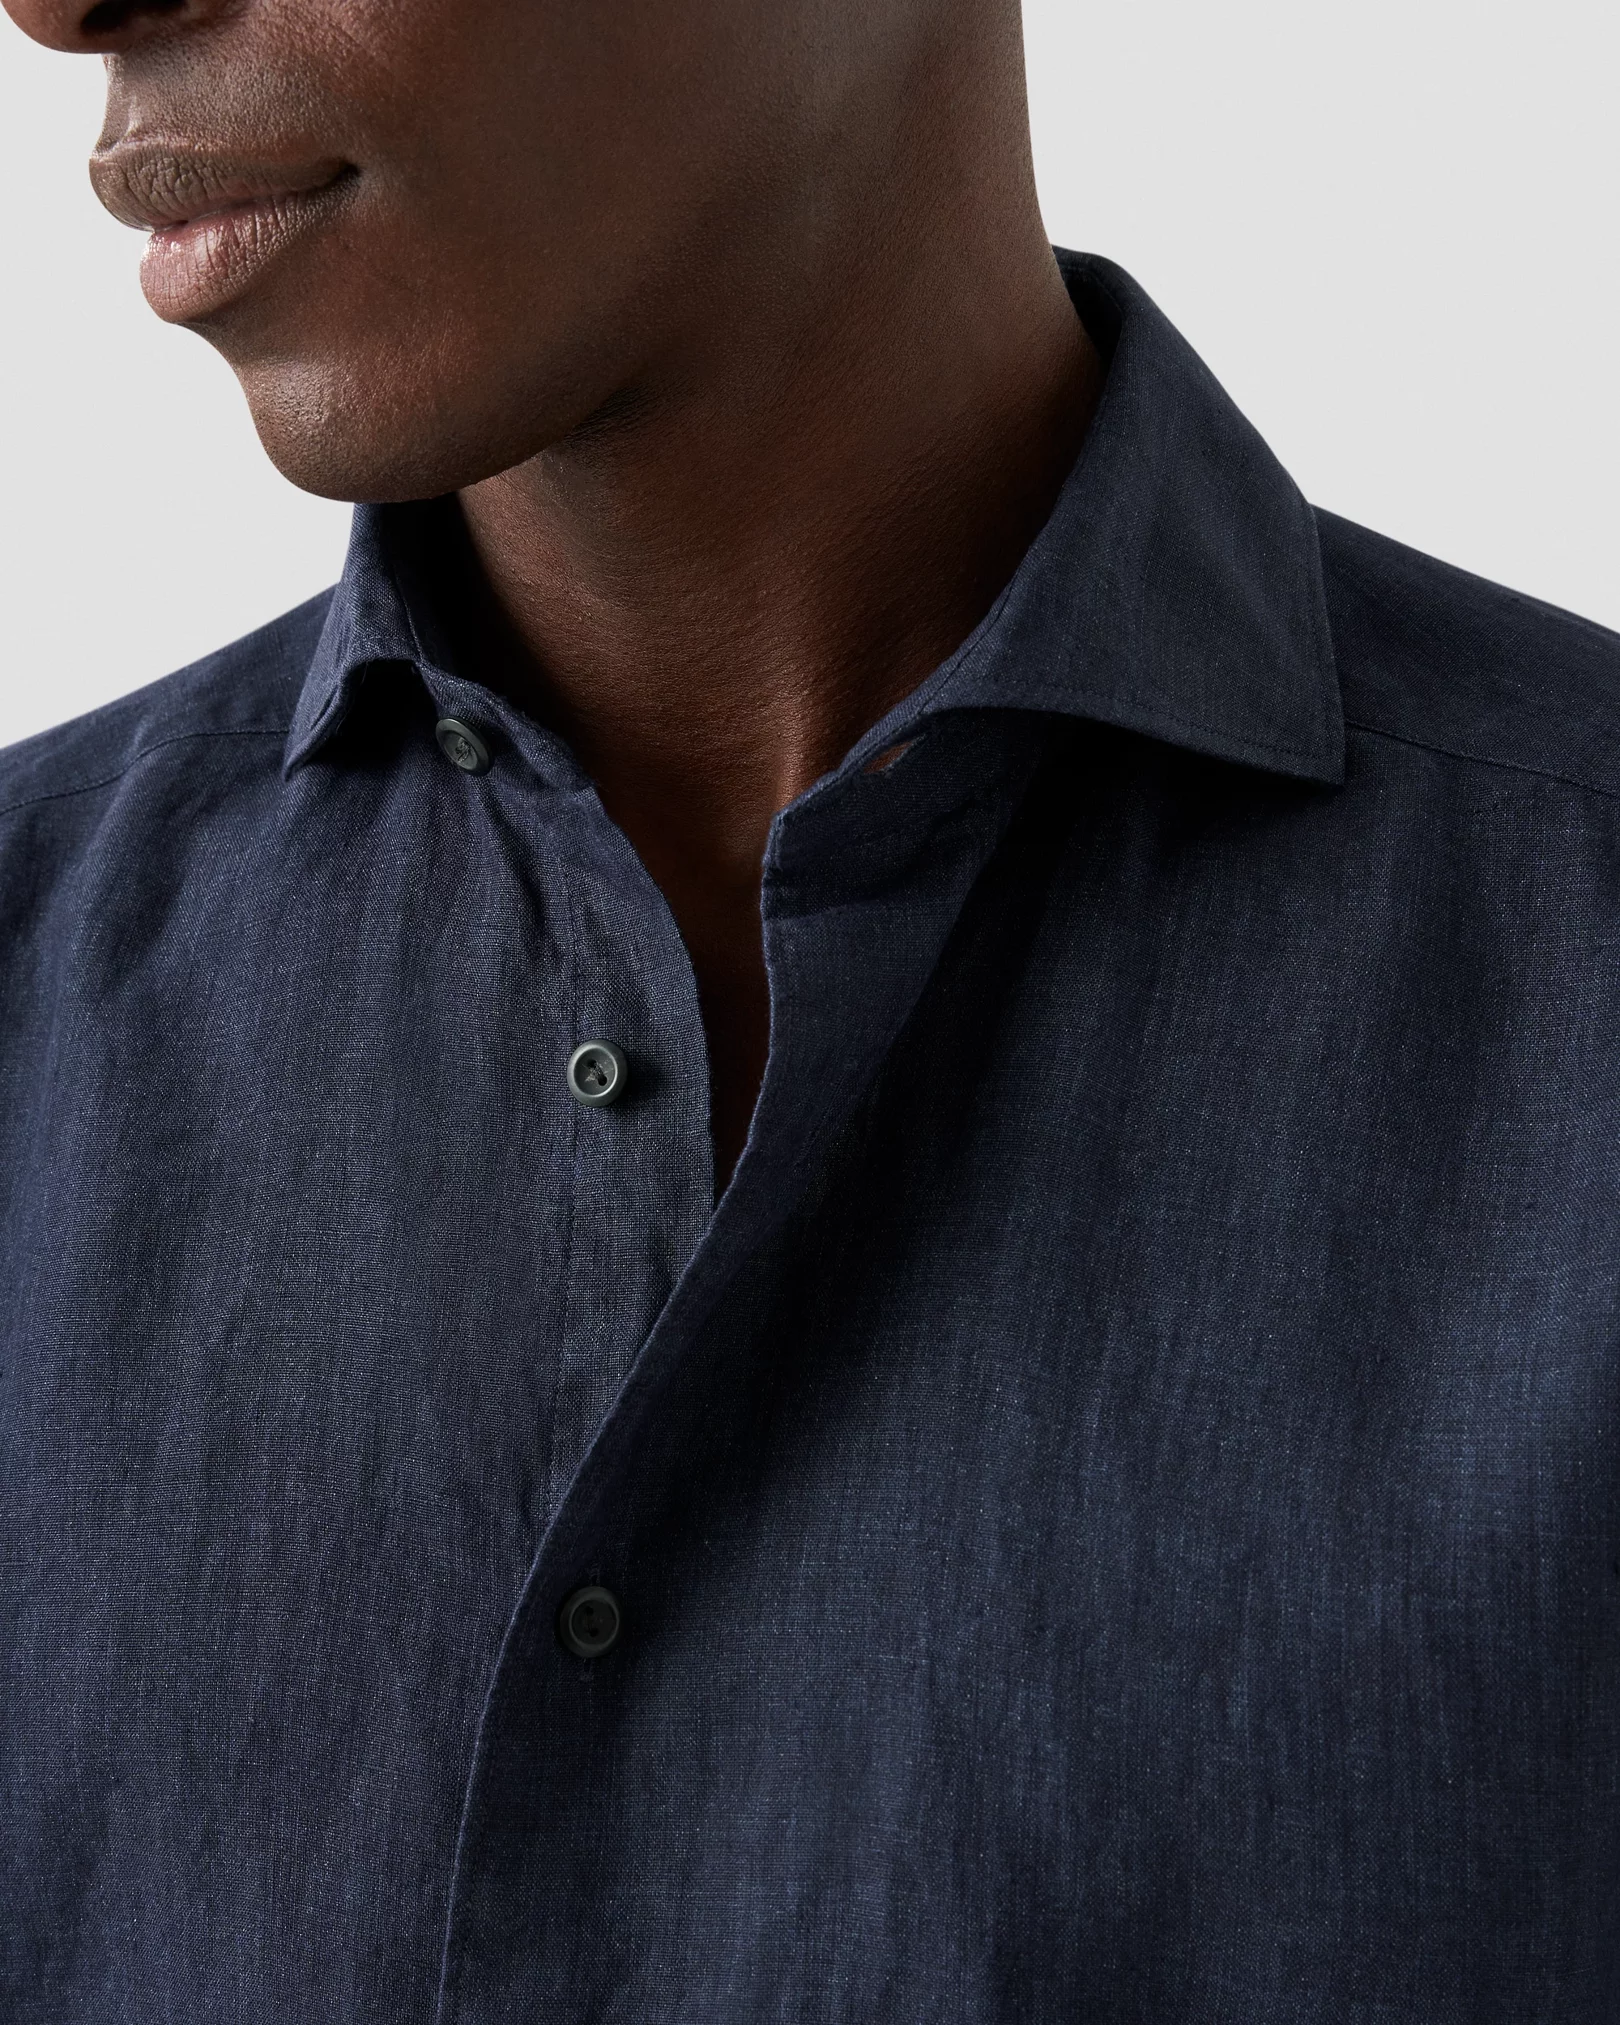 Eton - navy short sleeve linen shirt